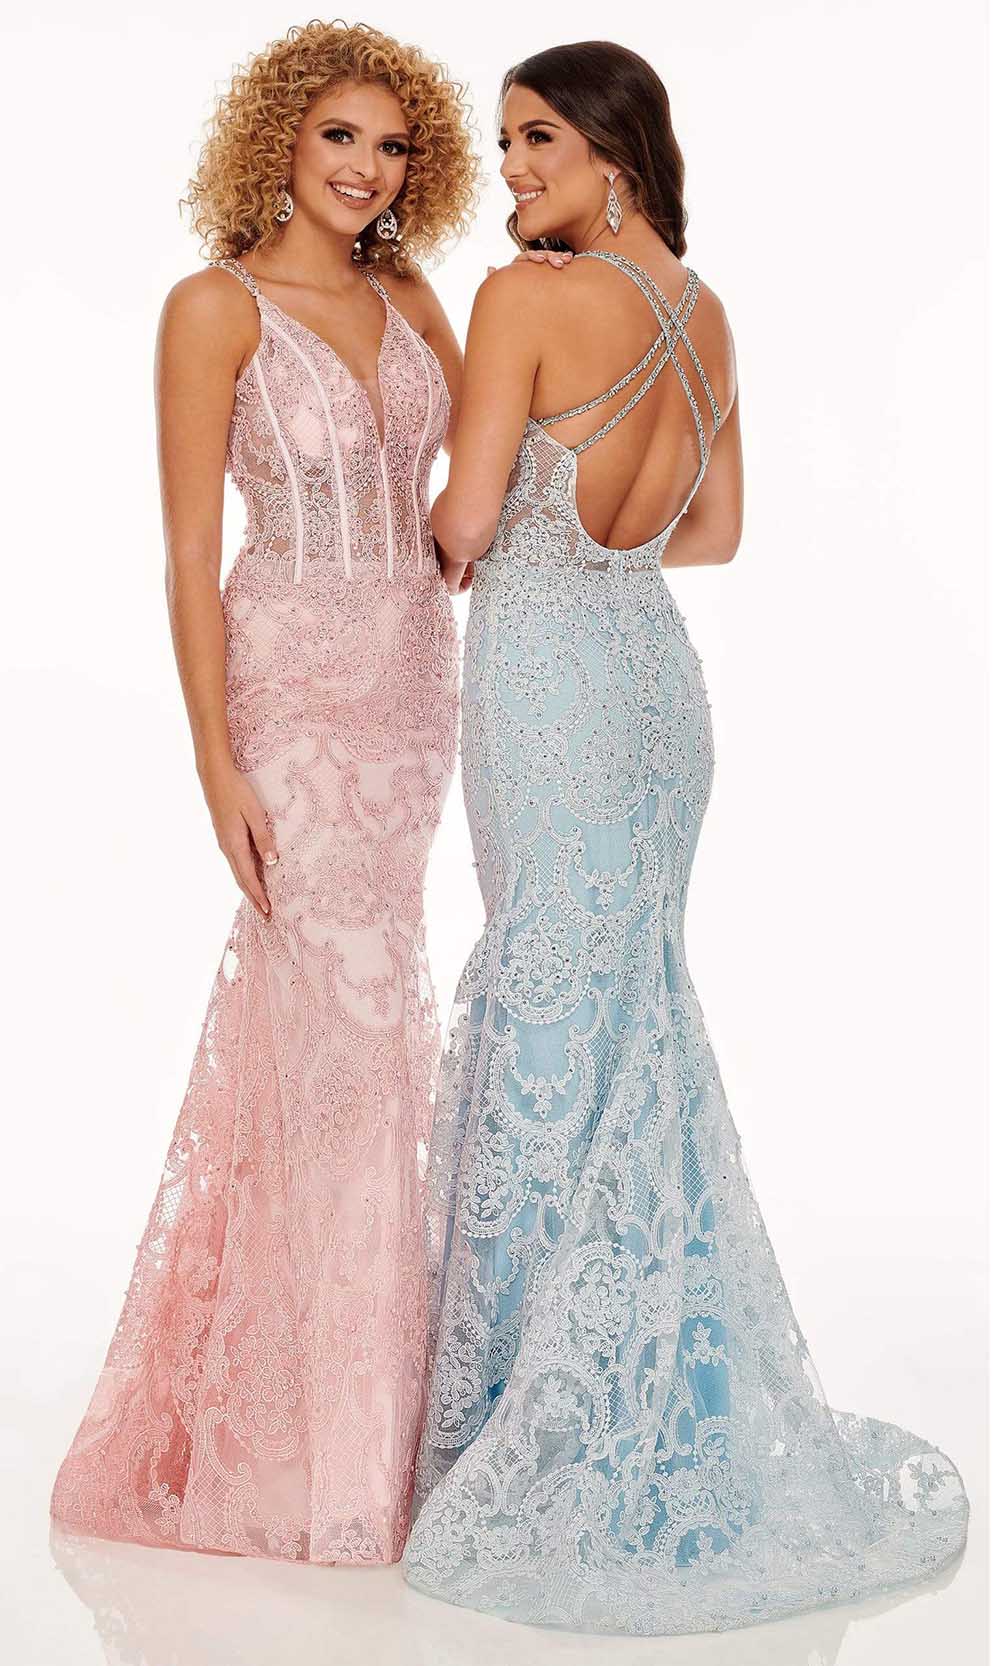 Rachel Allan - 70112 Applique Deep V Neck Mermaid Gown Prom Dresses